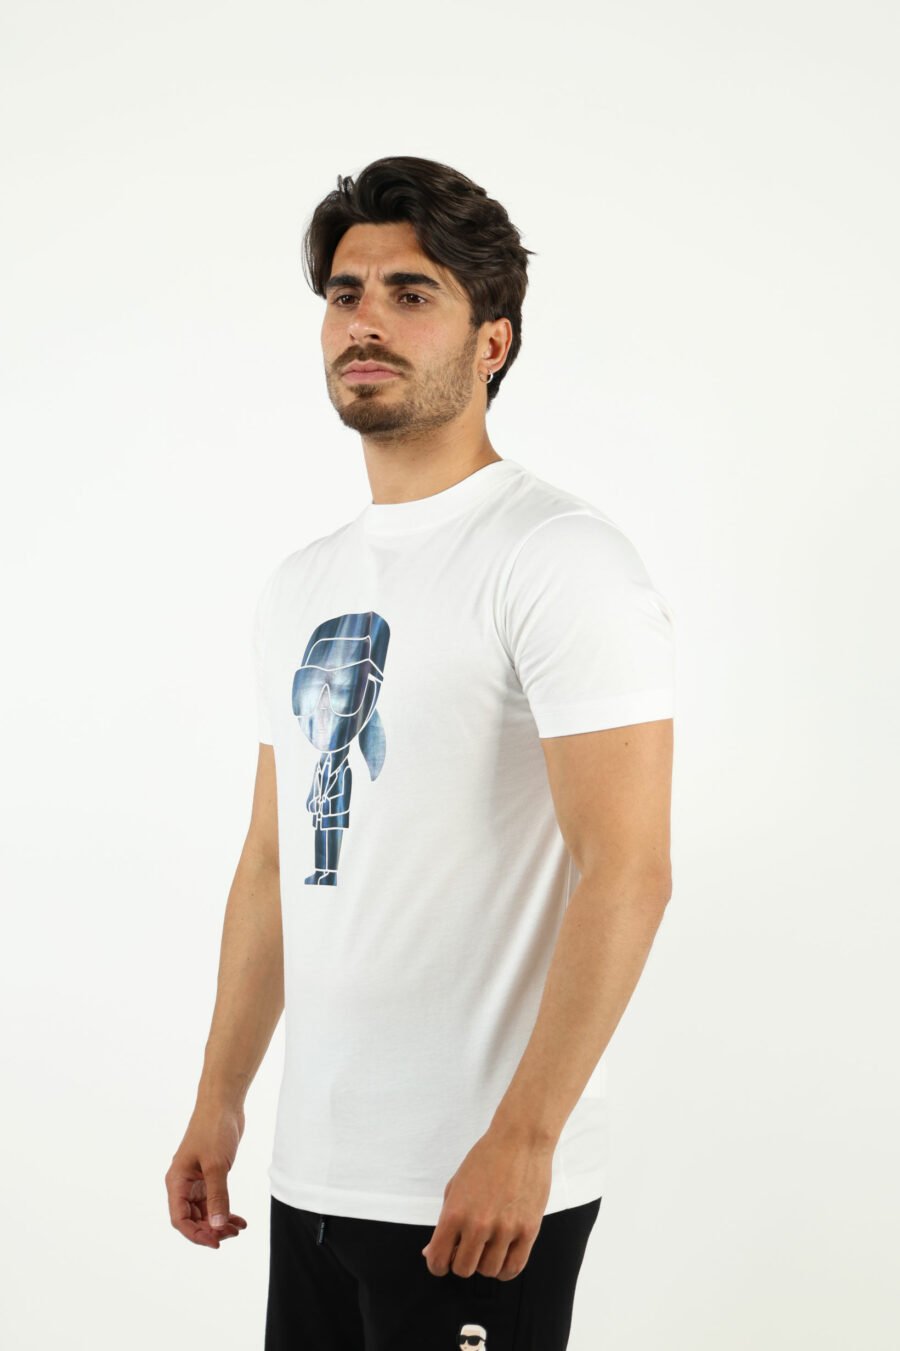 Camiseta blanca con maxilogo "karl" negro - number13929